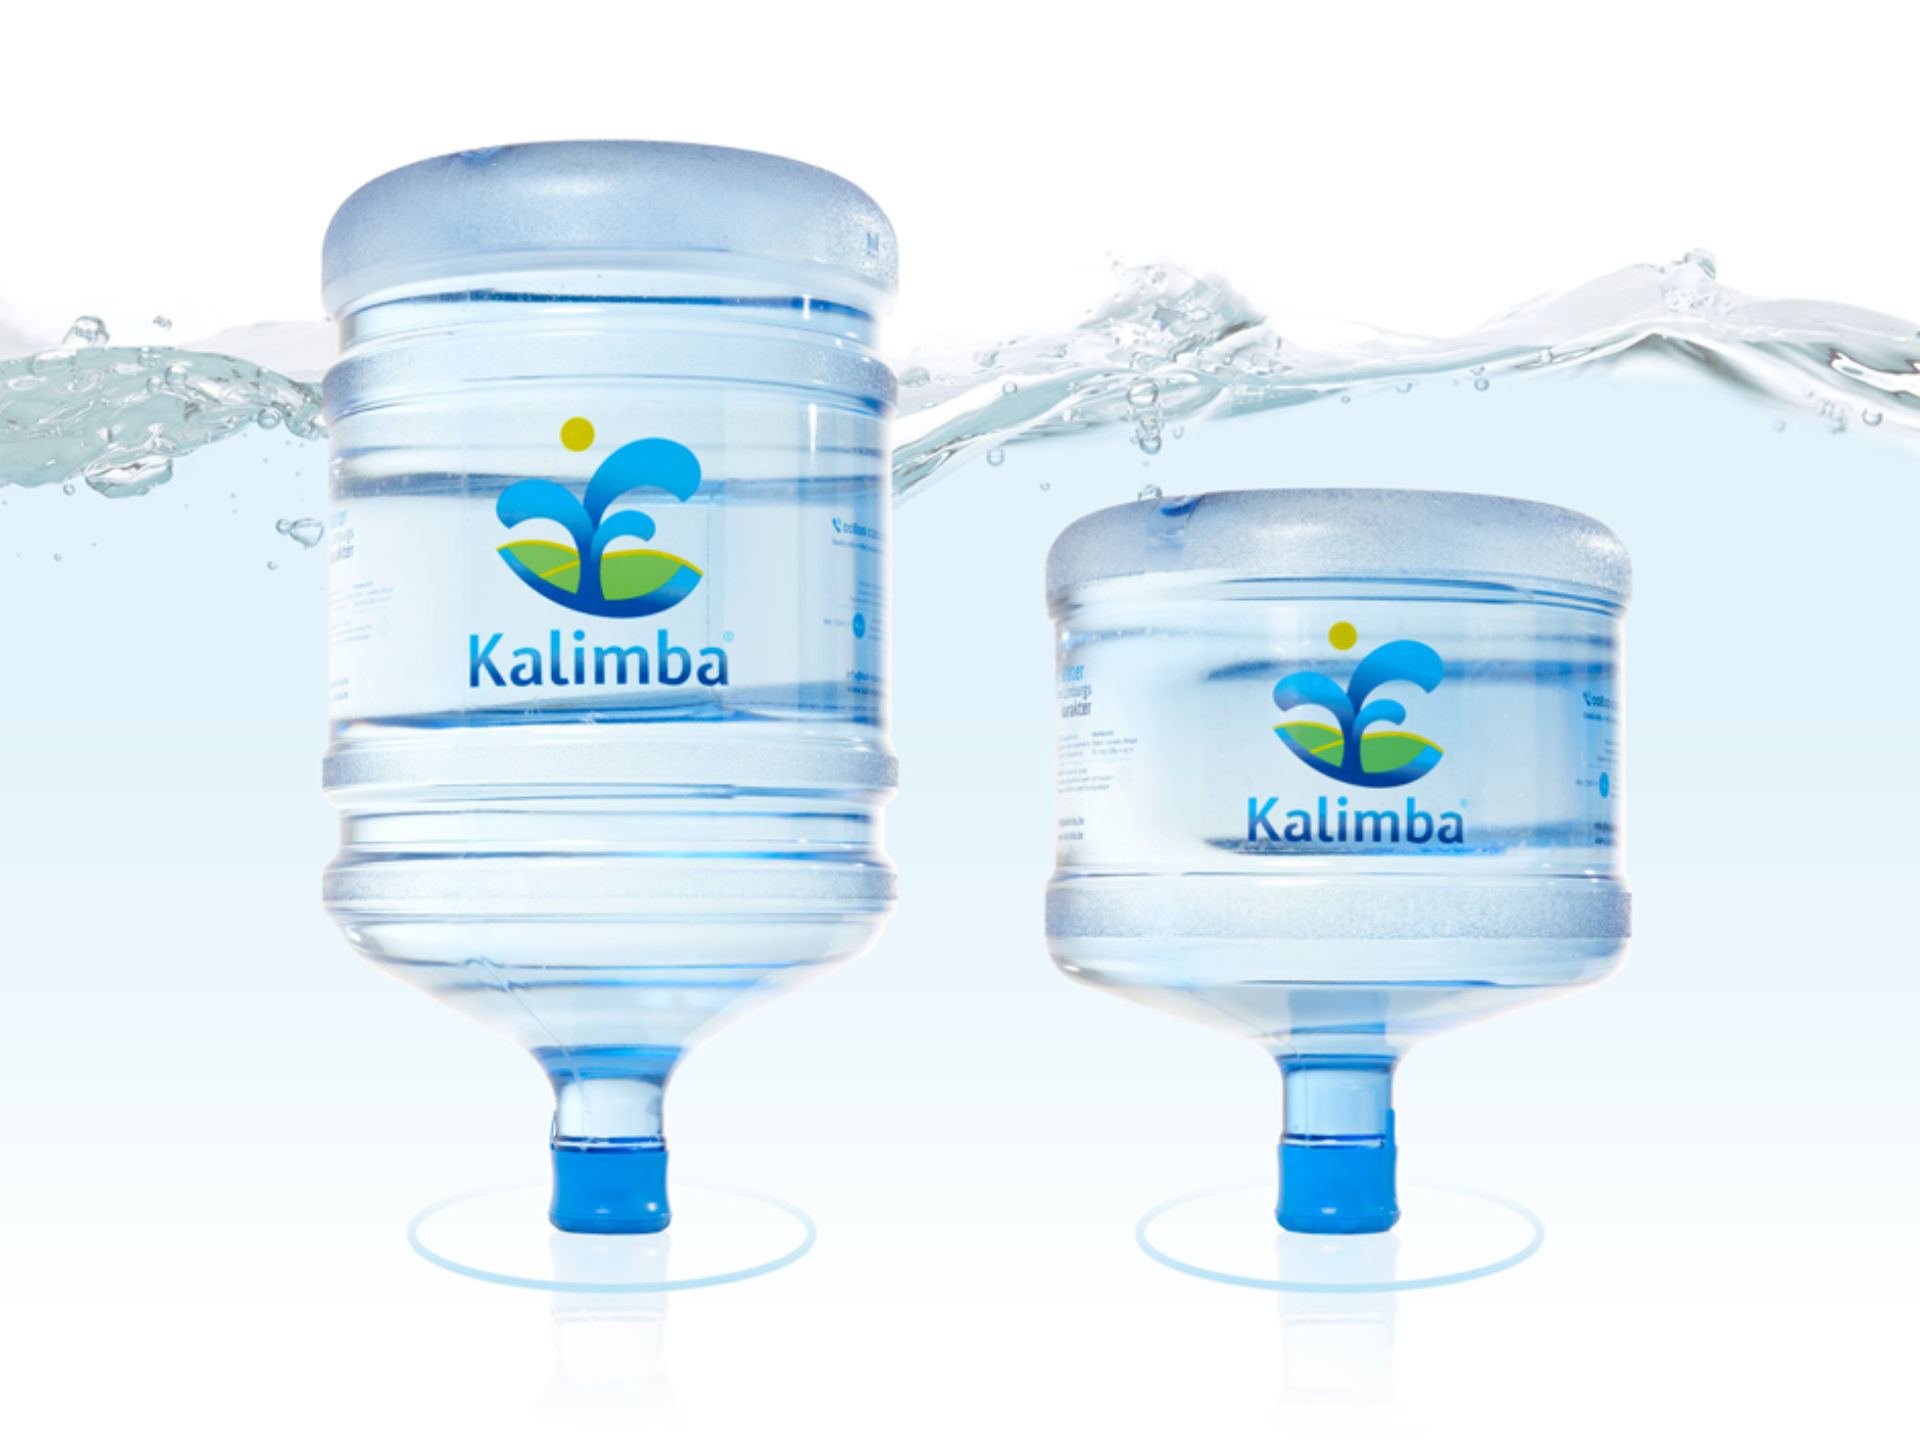 Kalimba bottles - Rene Verkaart)